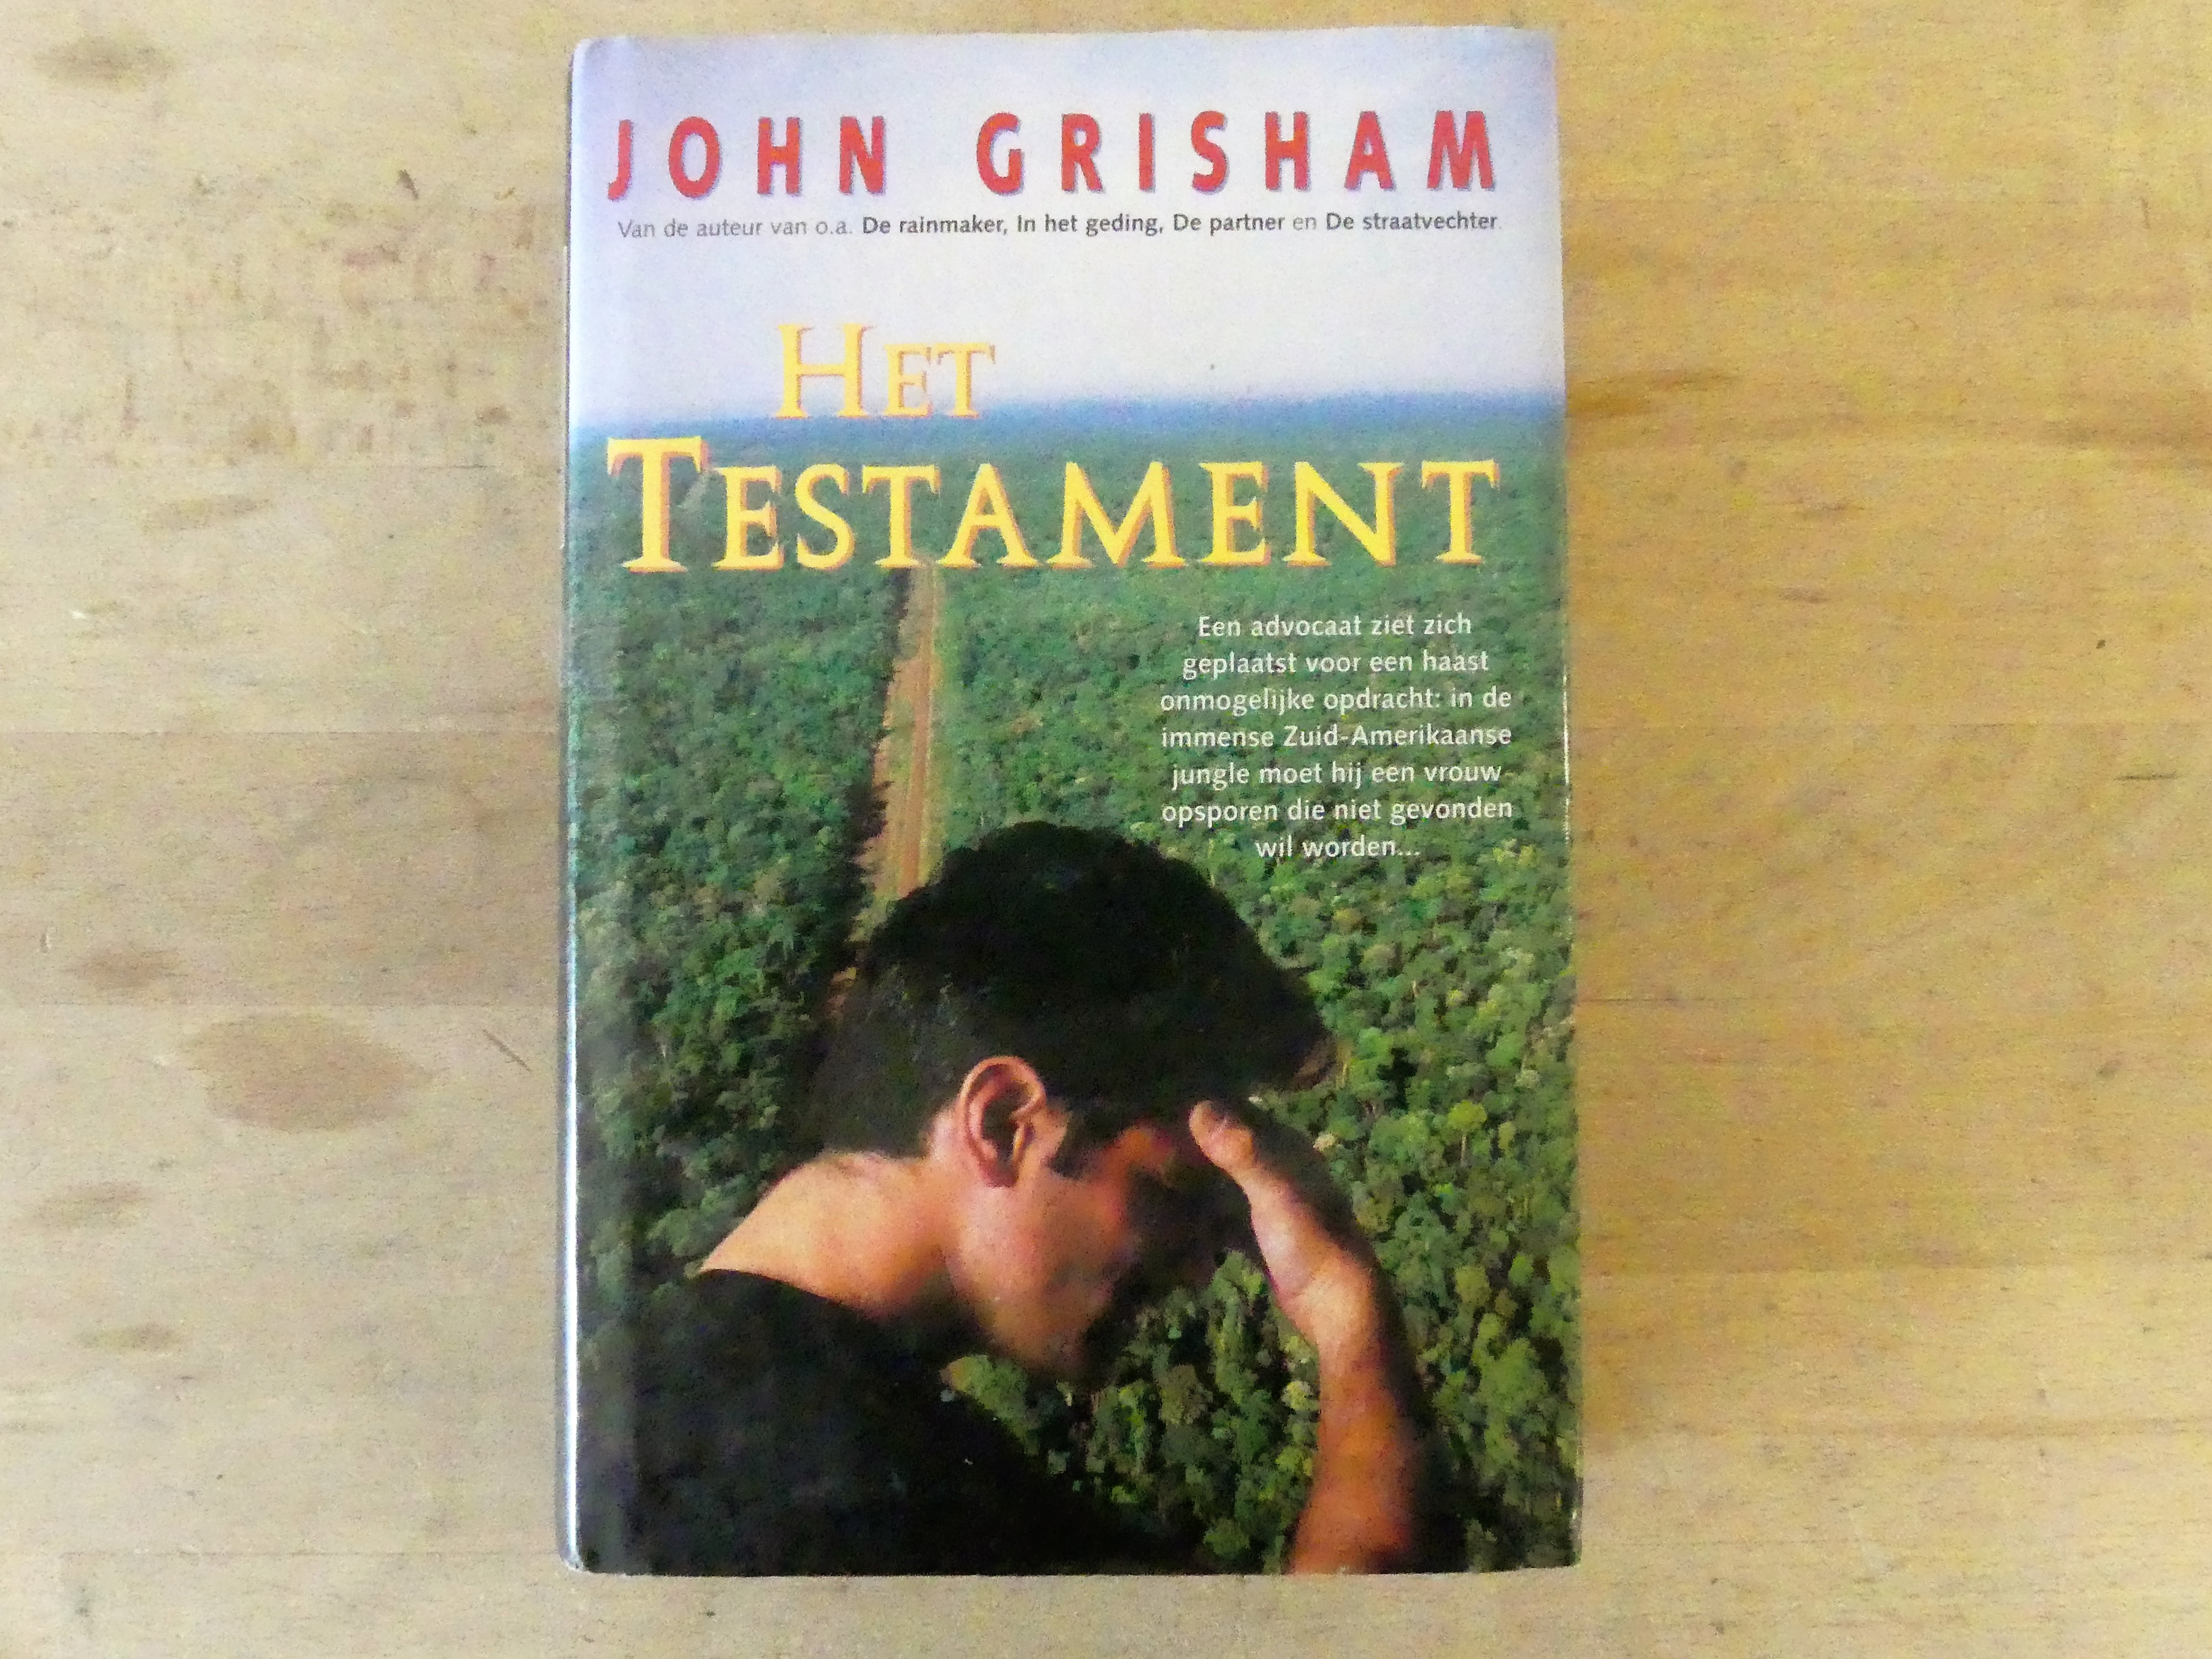 John Grisham "Het Testament"     